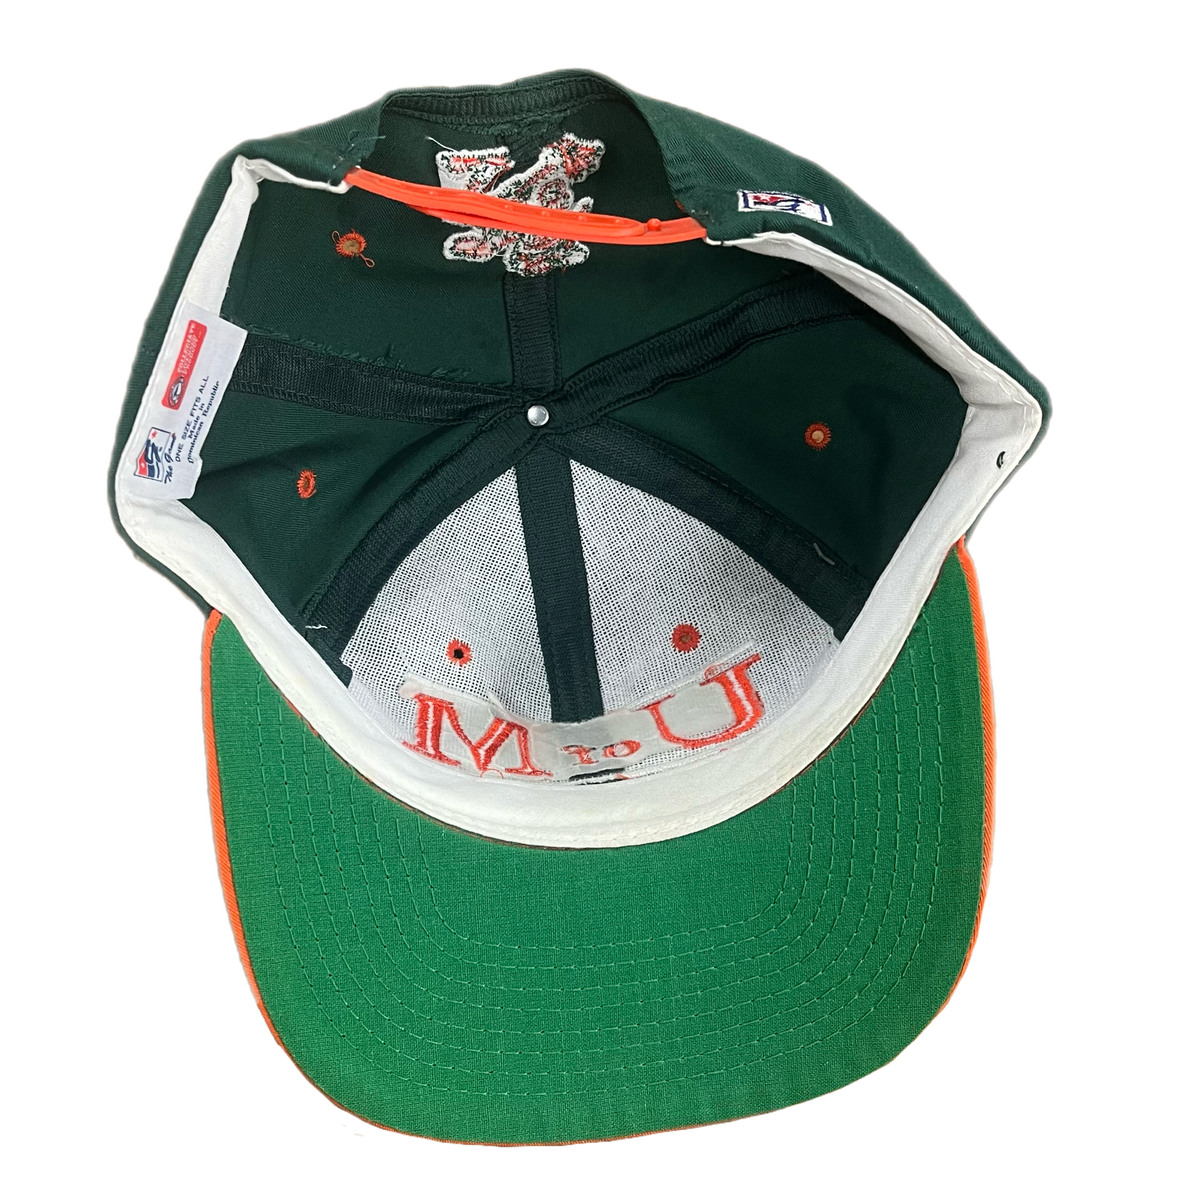 Vintage University Of Miami &quot;U Of M&quot; Snapback Hat